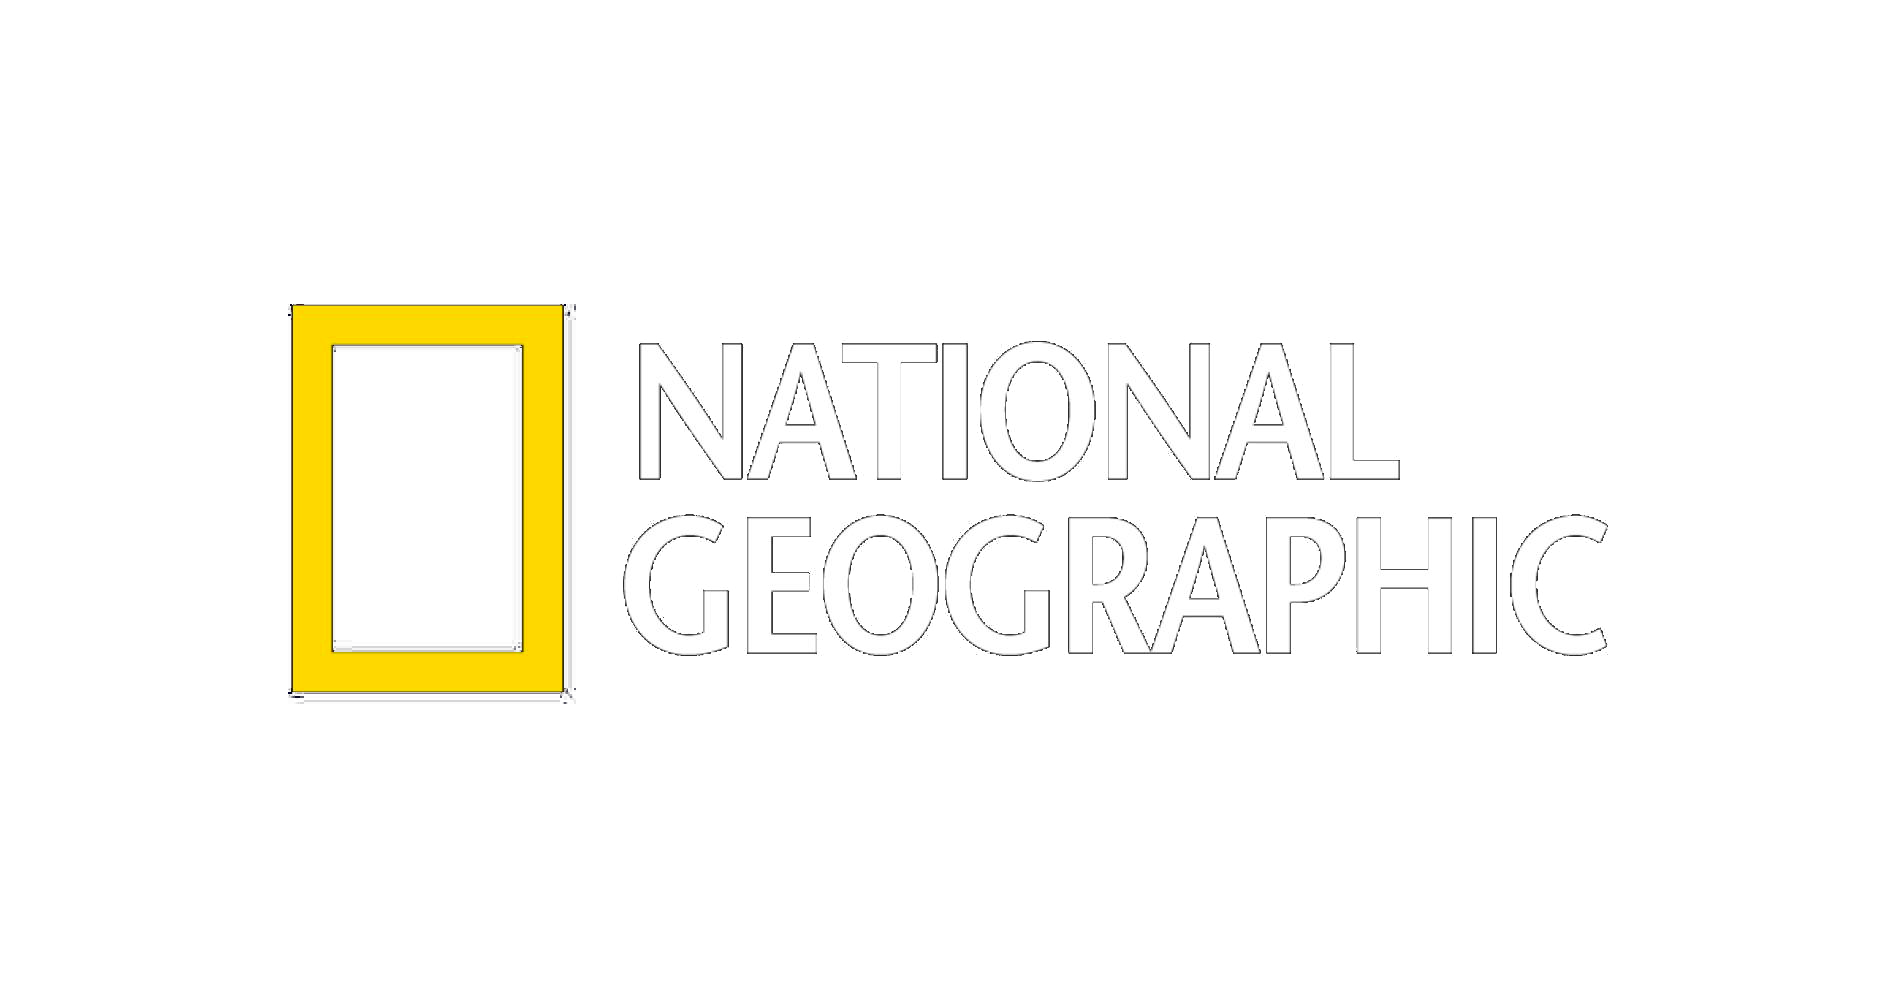 logo-national-geographic